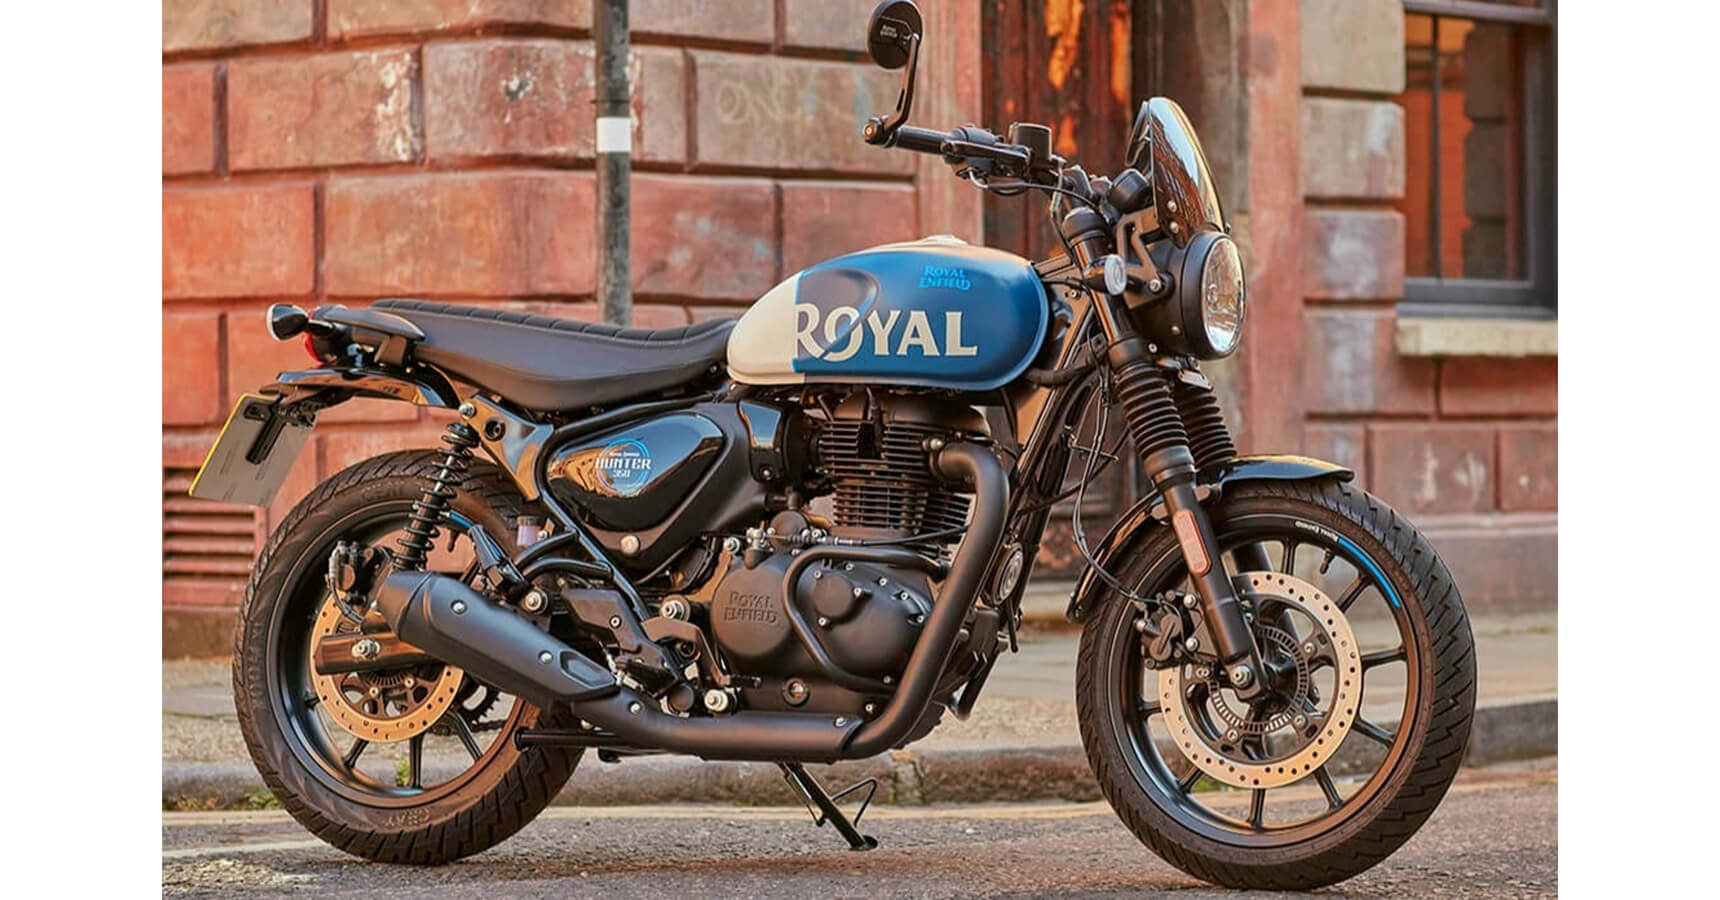 Top 5 Best Selling Royal Enfield Motorcycles